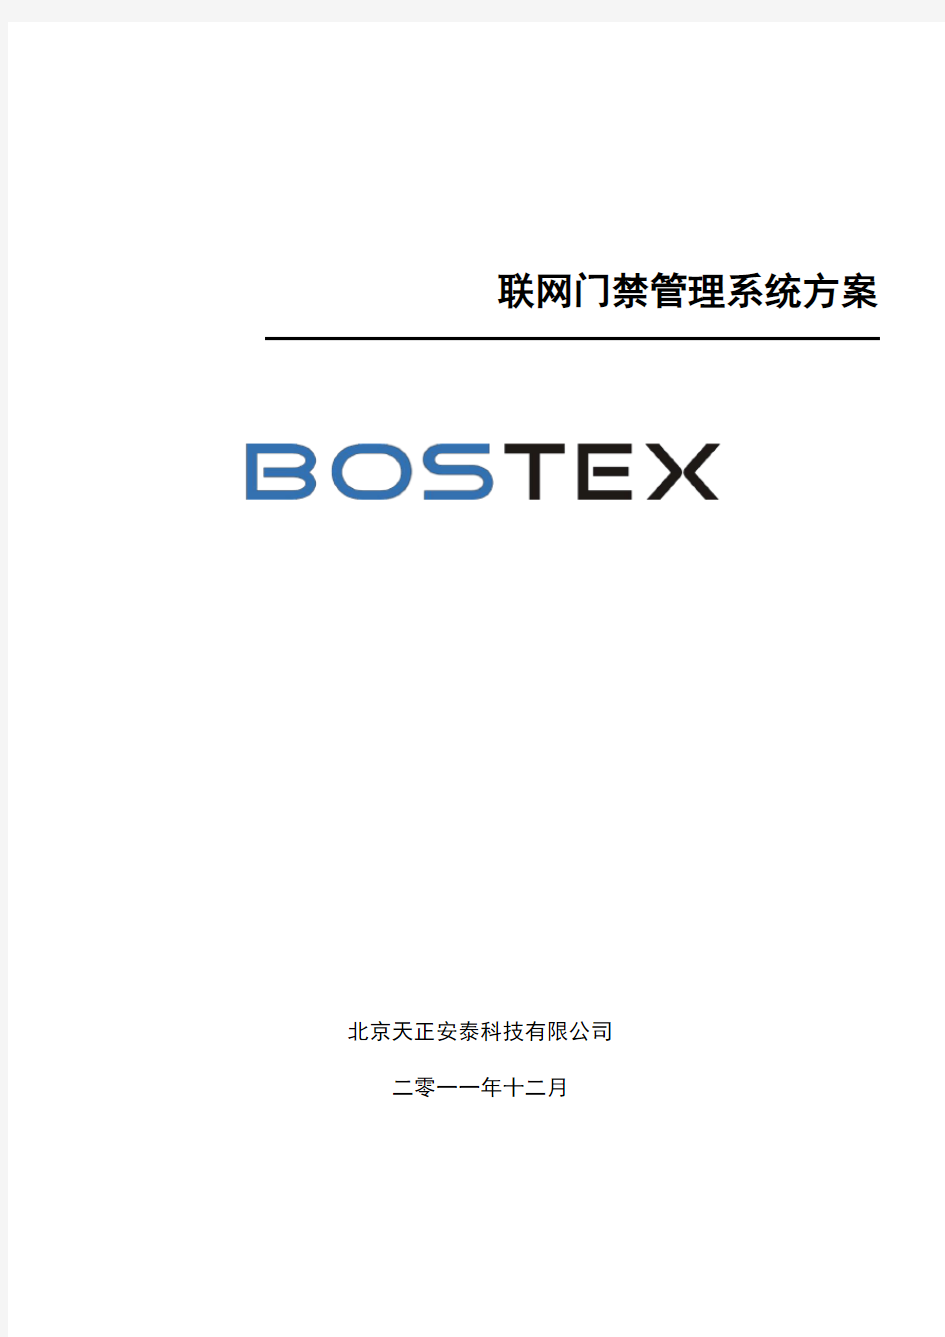 Bostex联网门禁系统方案